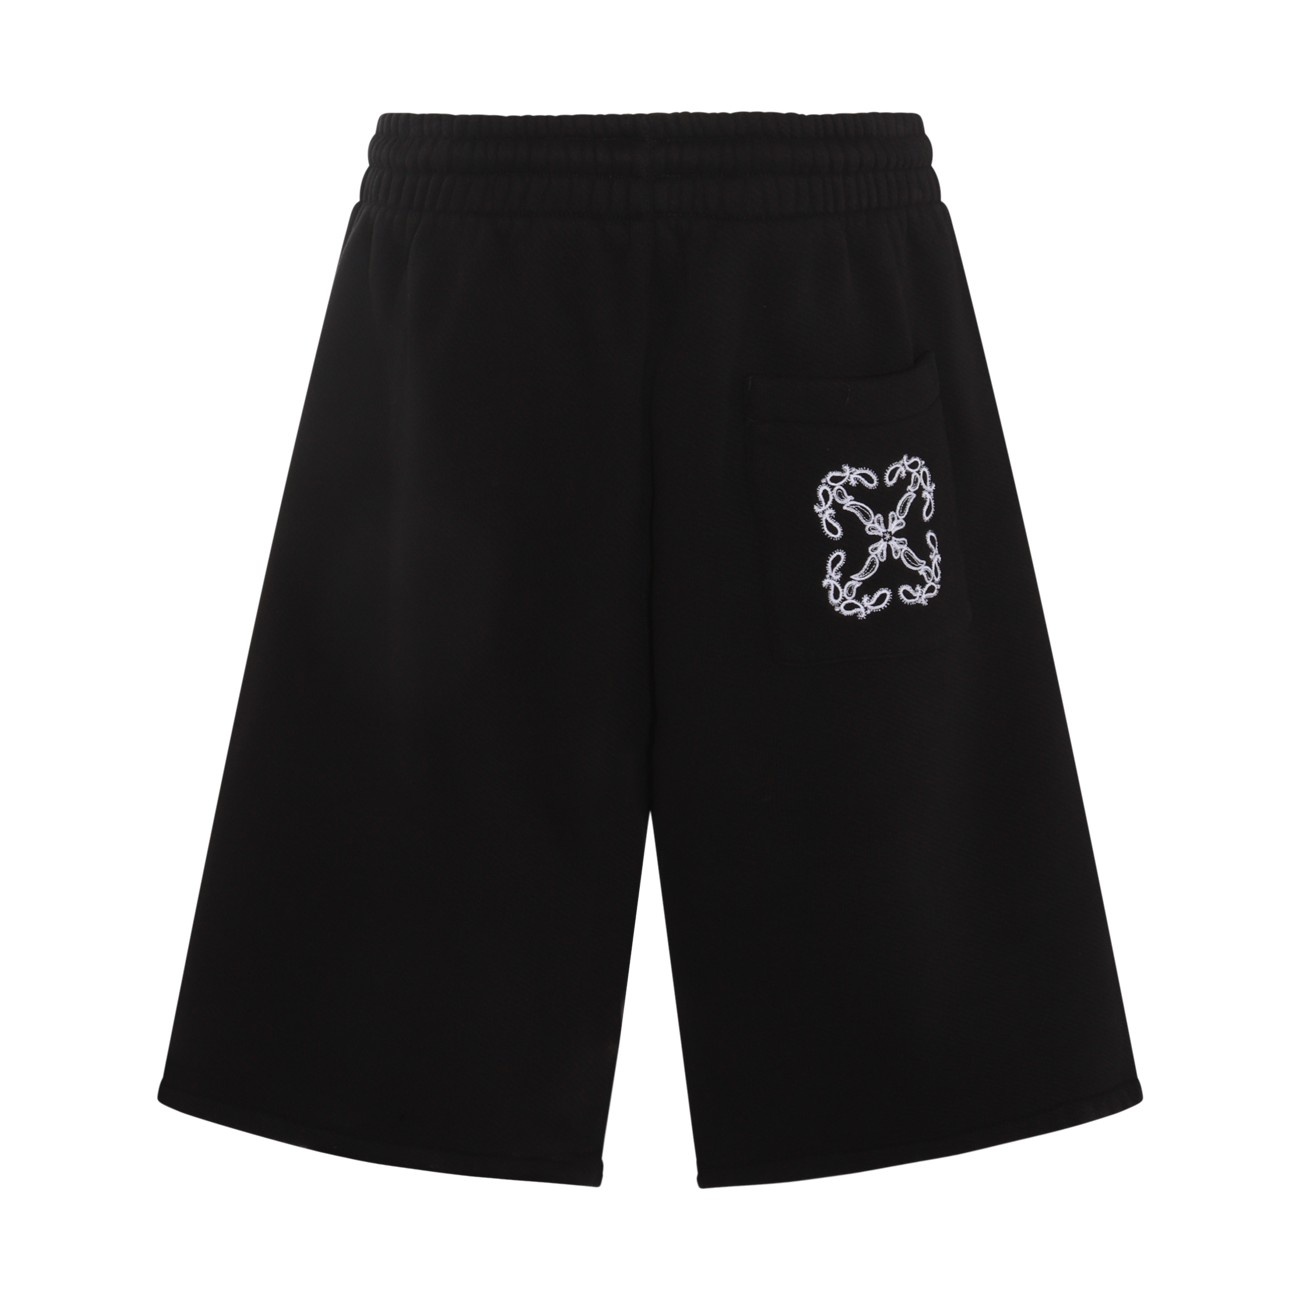 black cotton shorts - 2